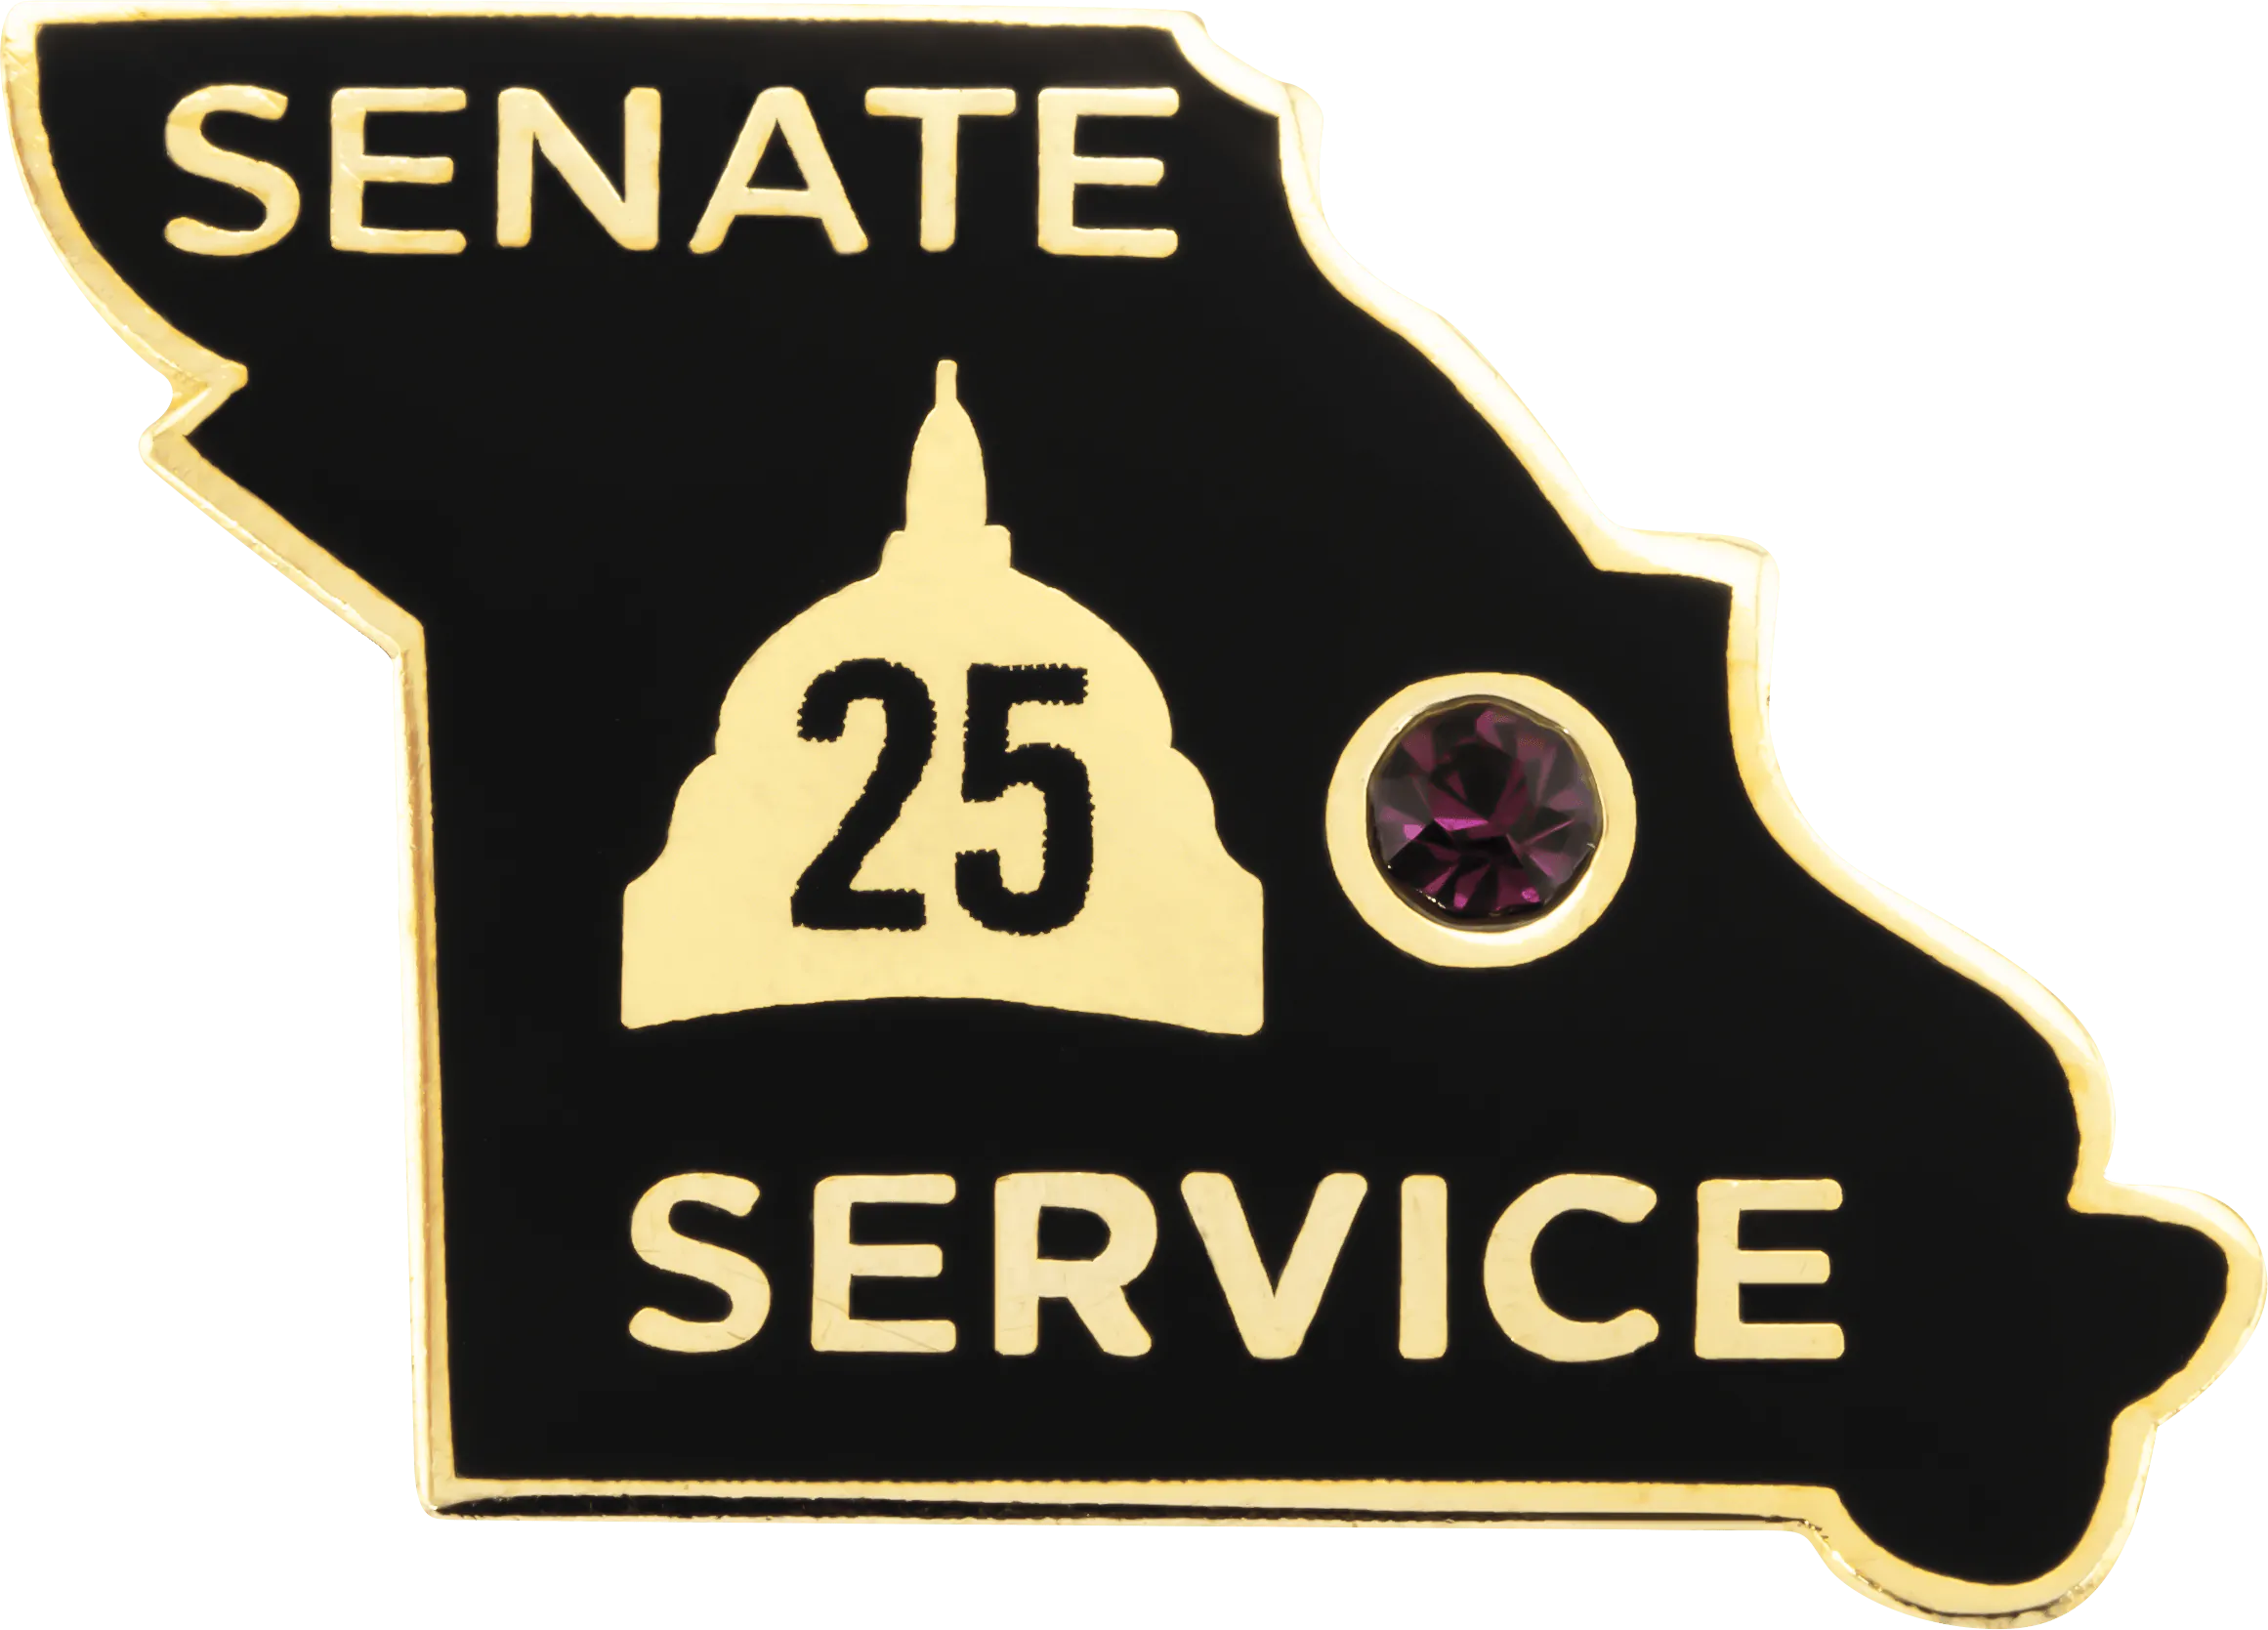 Senate Service - 25 Years